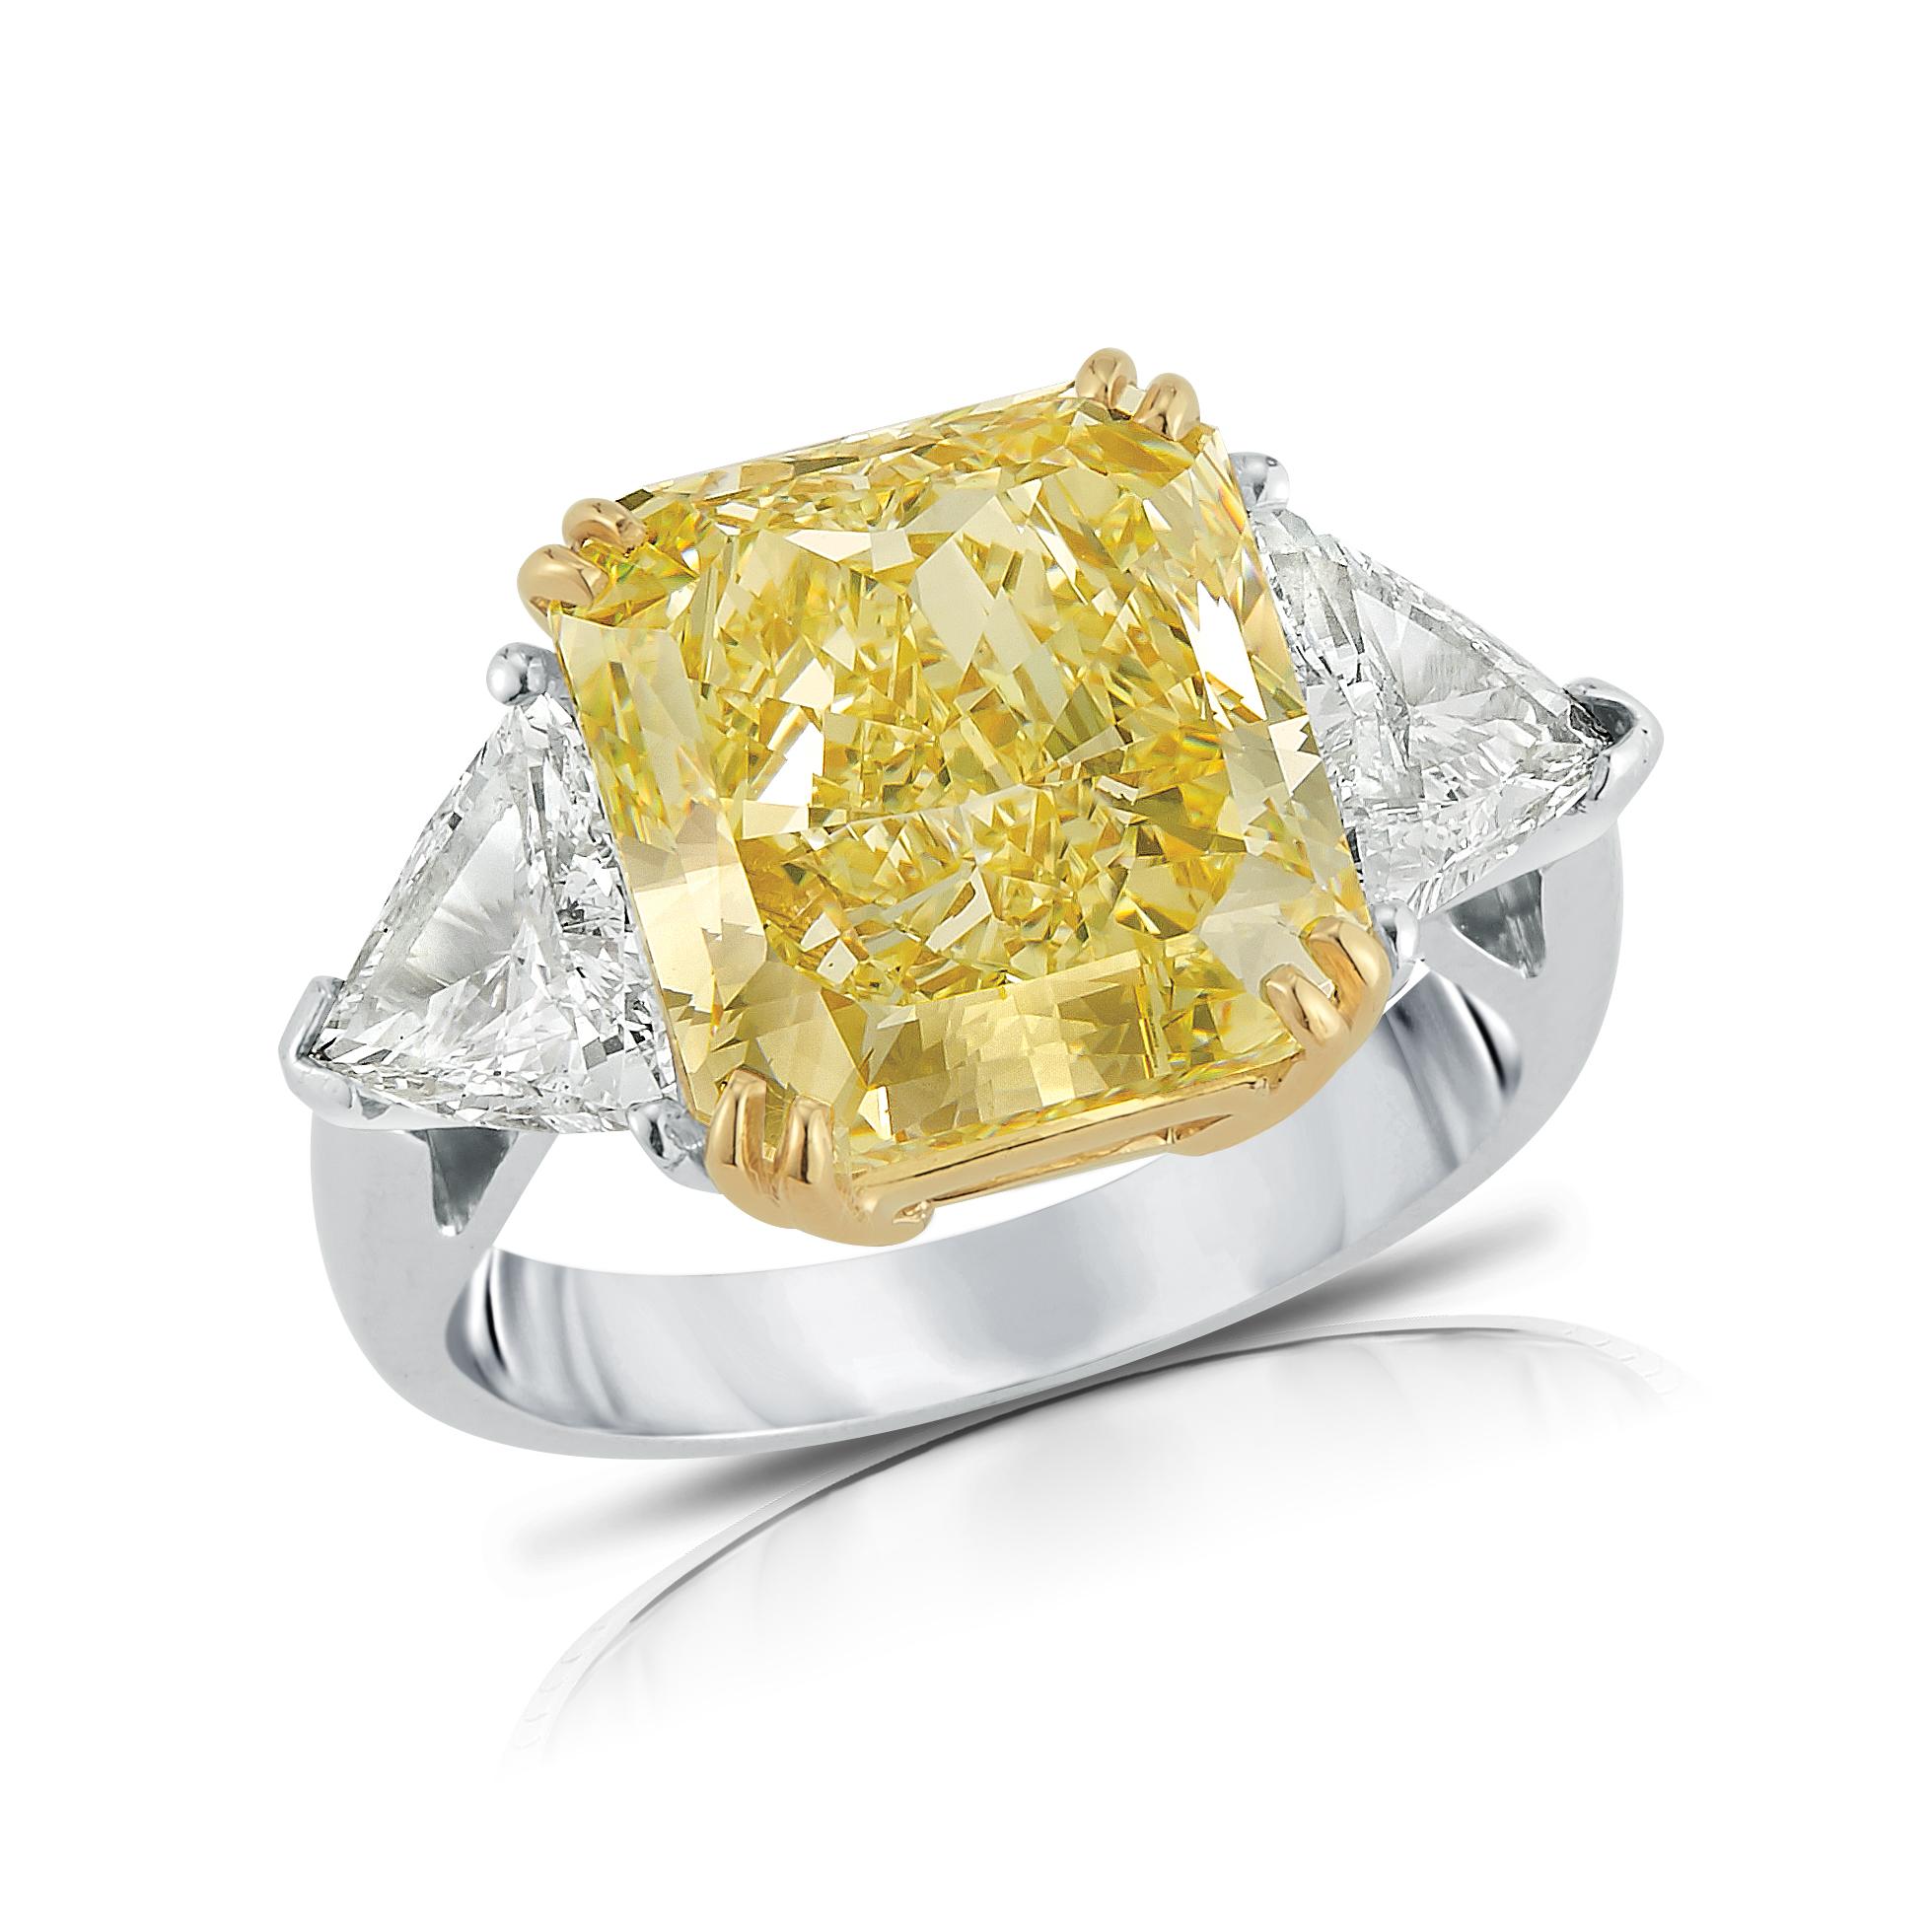 Magnificent Fancy Yellow 7.49 Carat Cushion Cut Diamond Engagement Ring ...